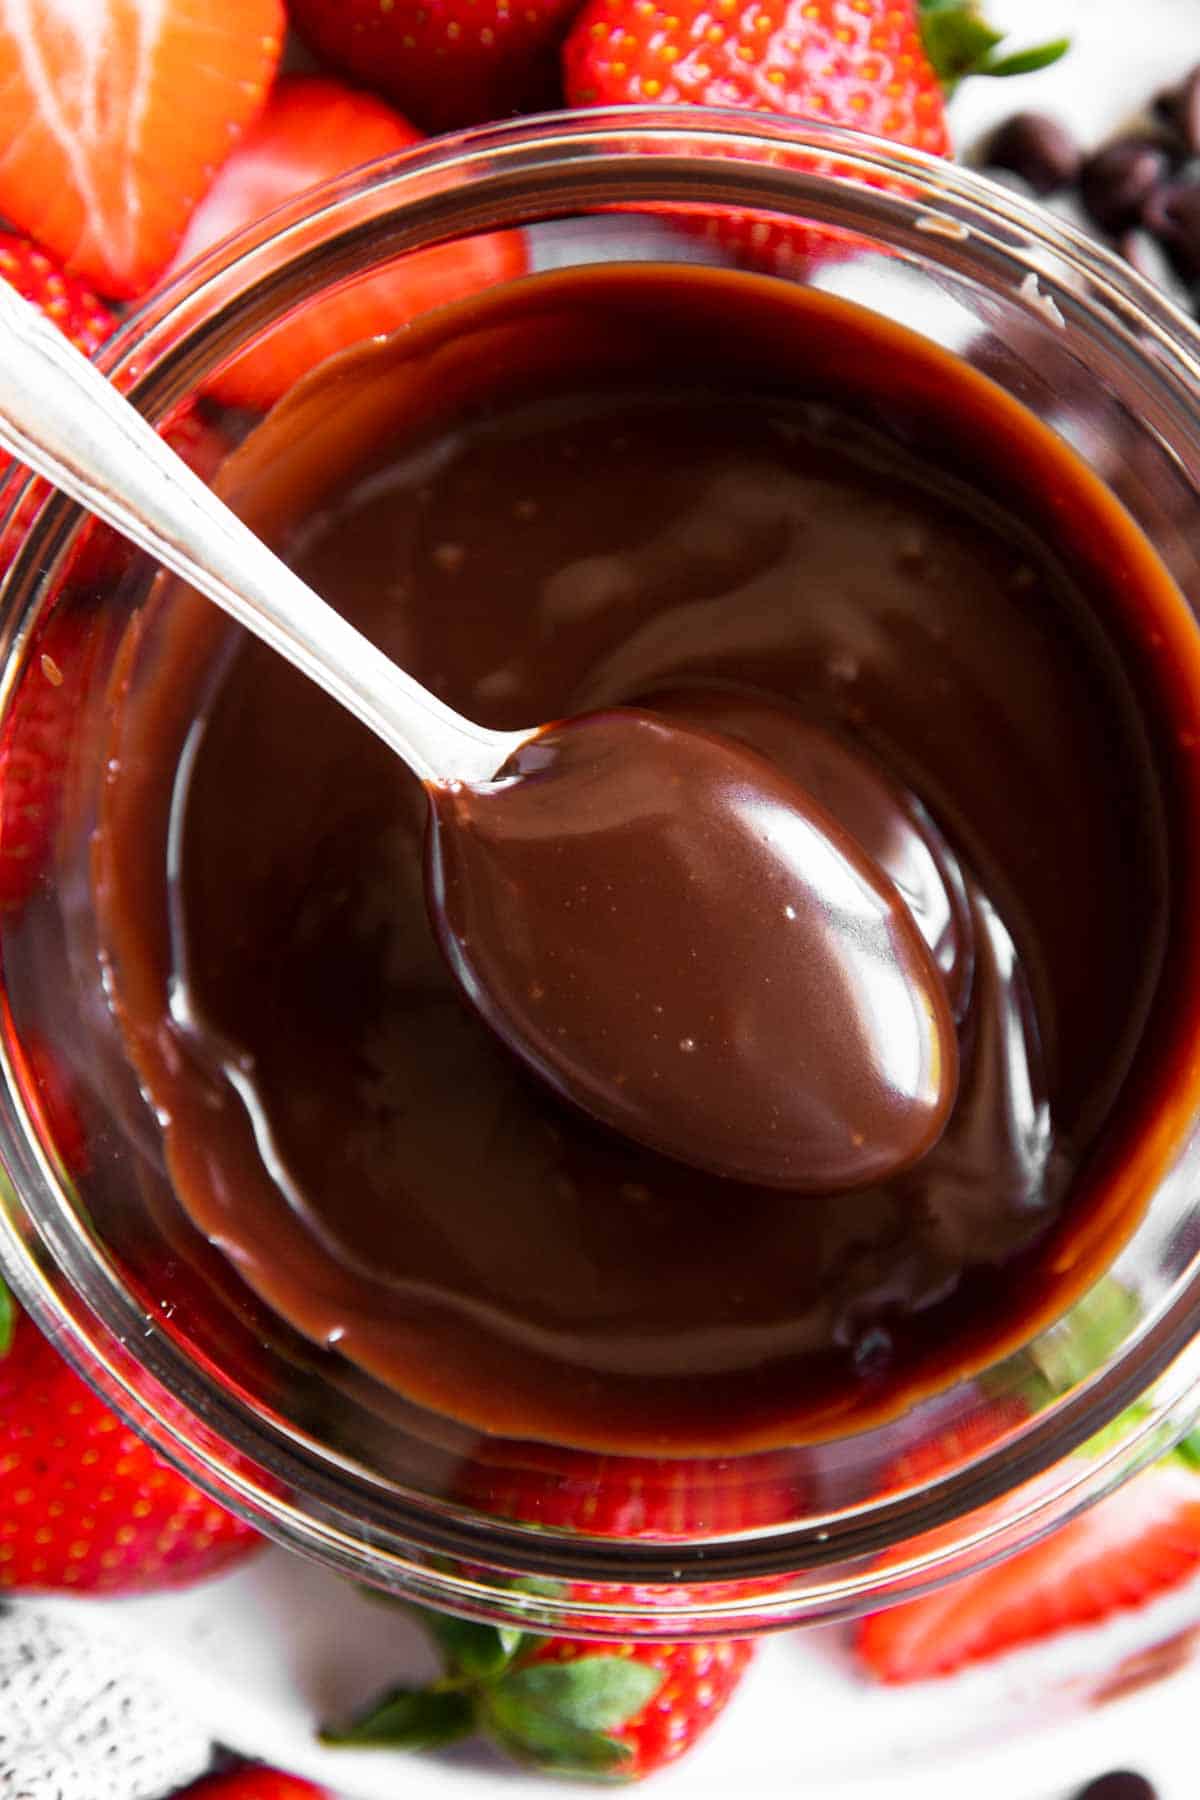 https://www.savorynothings.com/wp-content/uploads/2021/04/chocolate-sauce-recipe-image-5.jpg